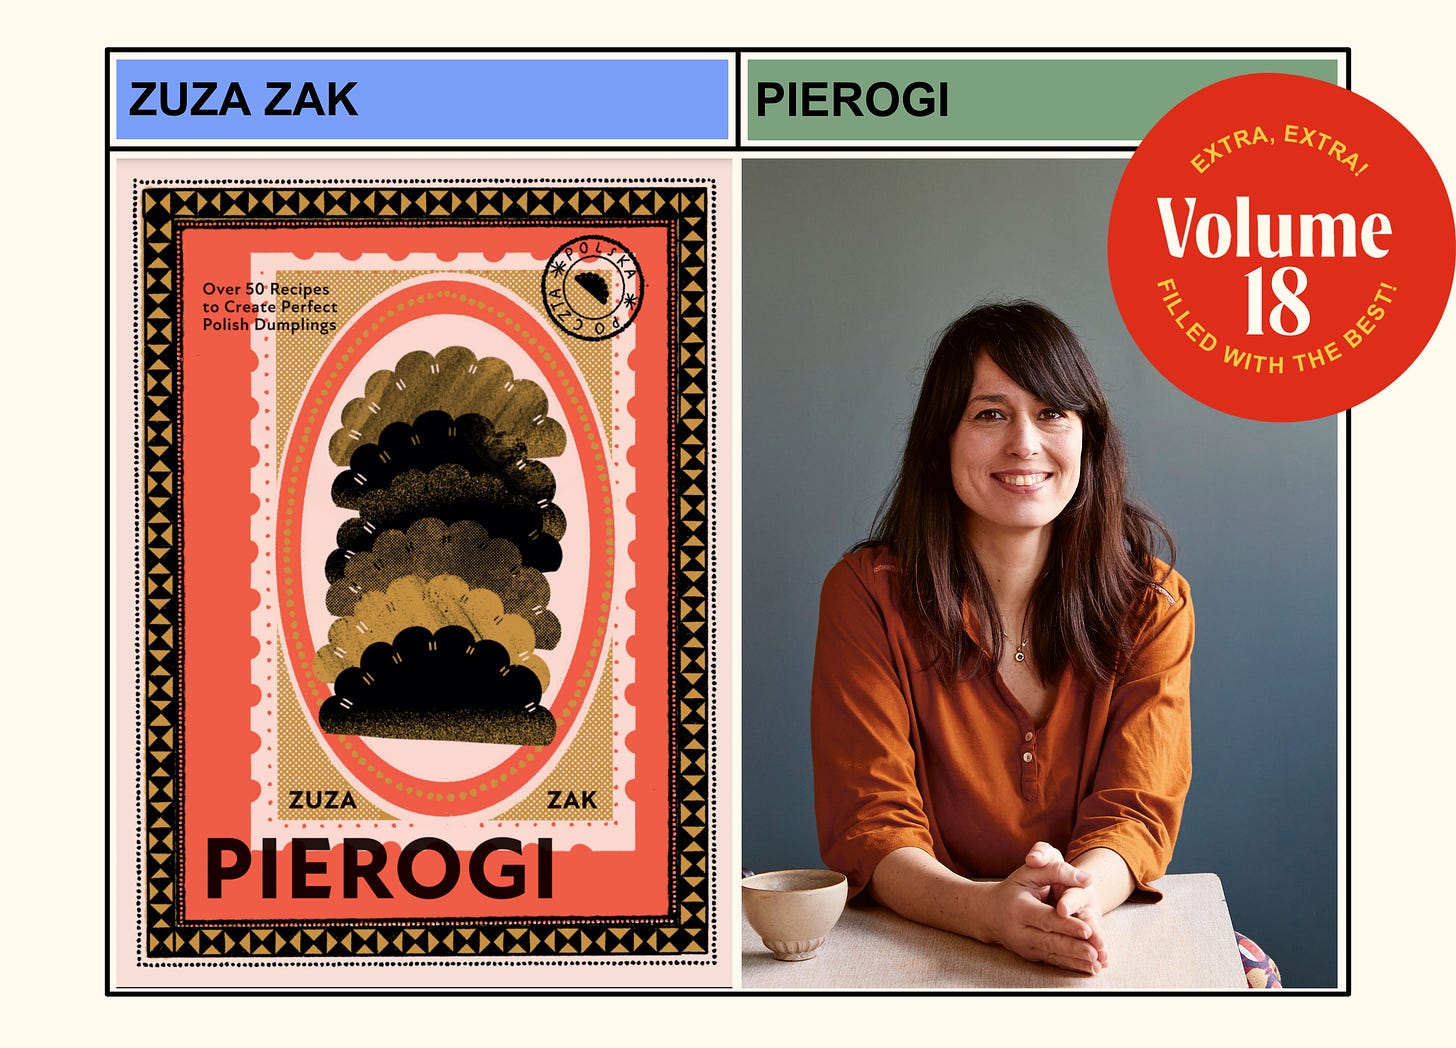 Zuza Zak pictured alongside her cookbook, Pierogi